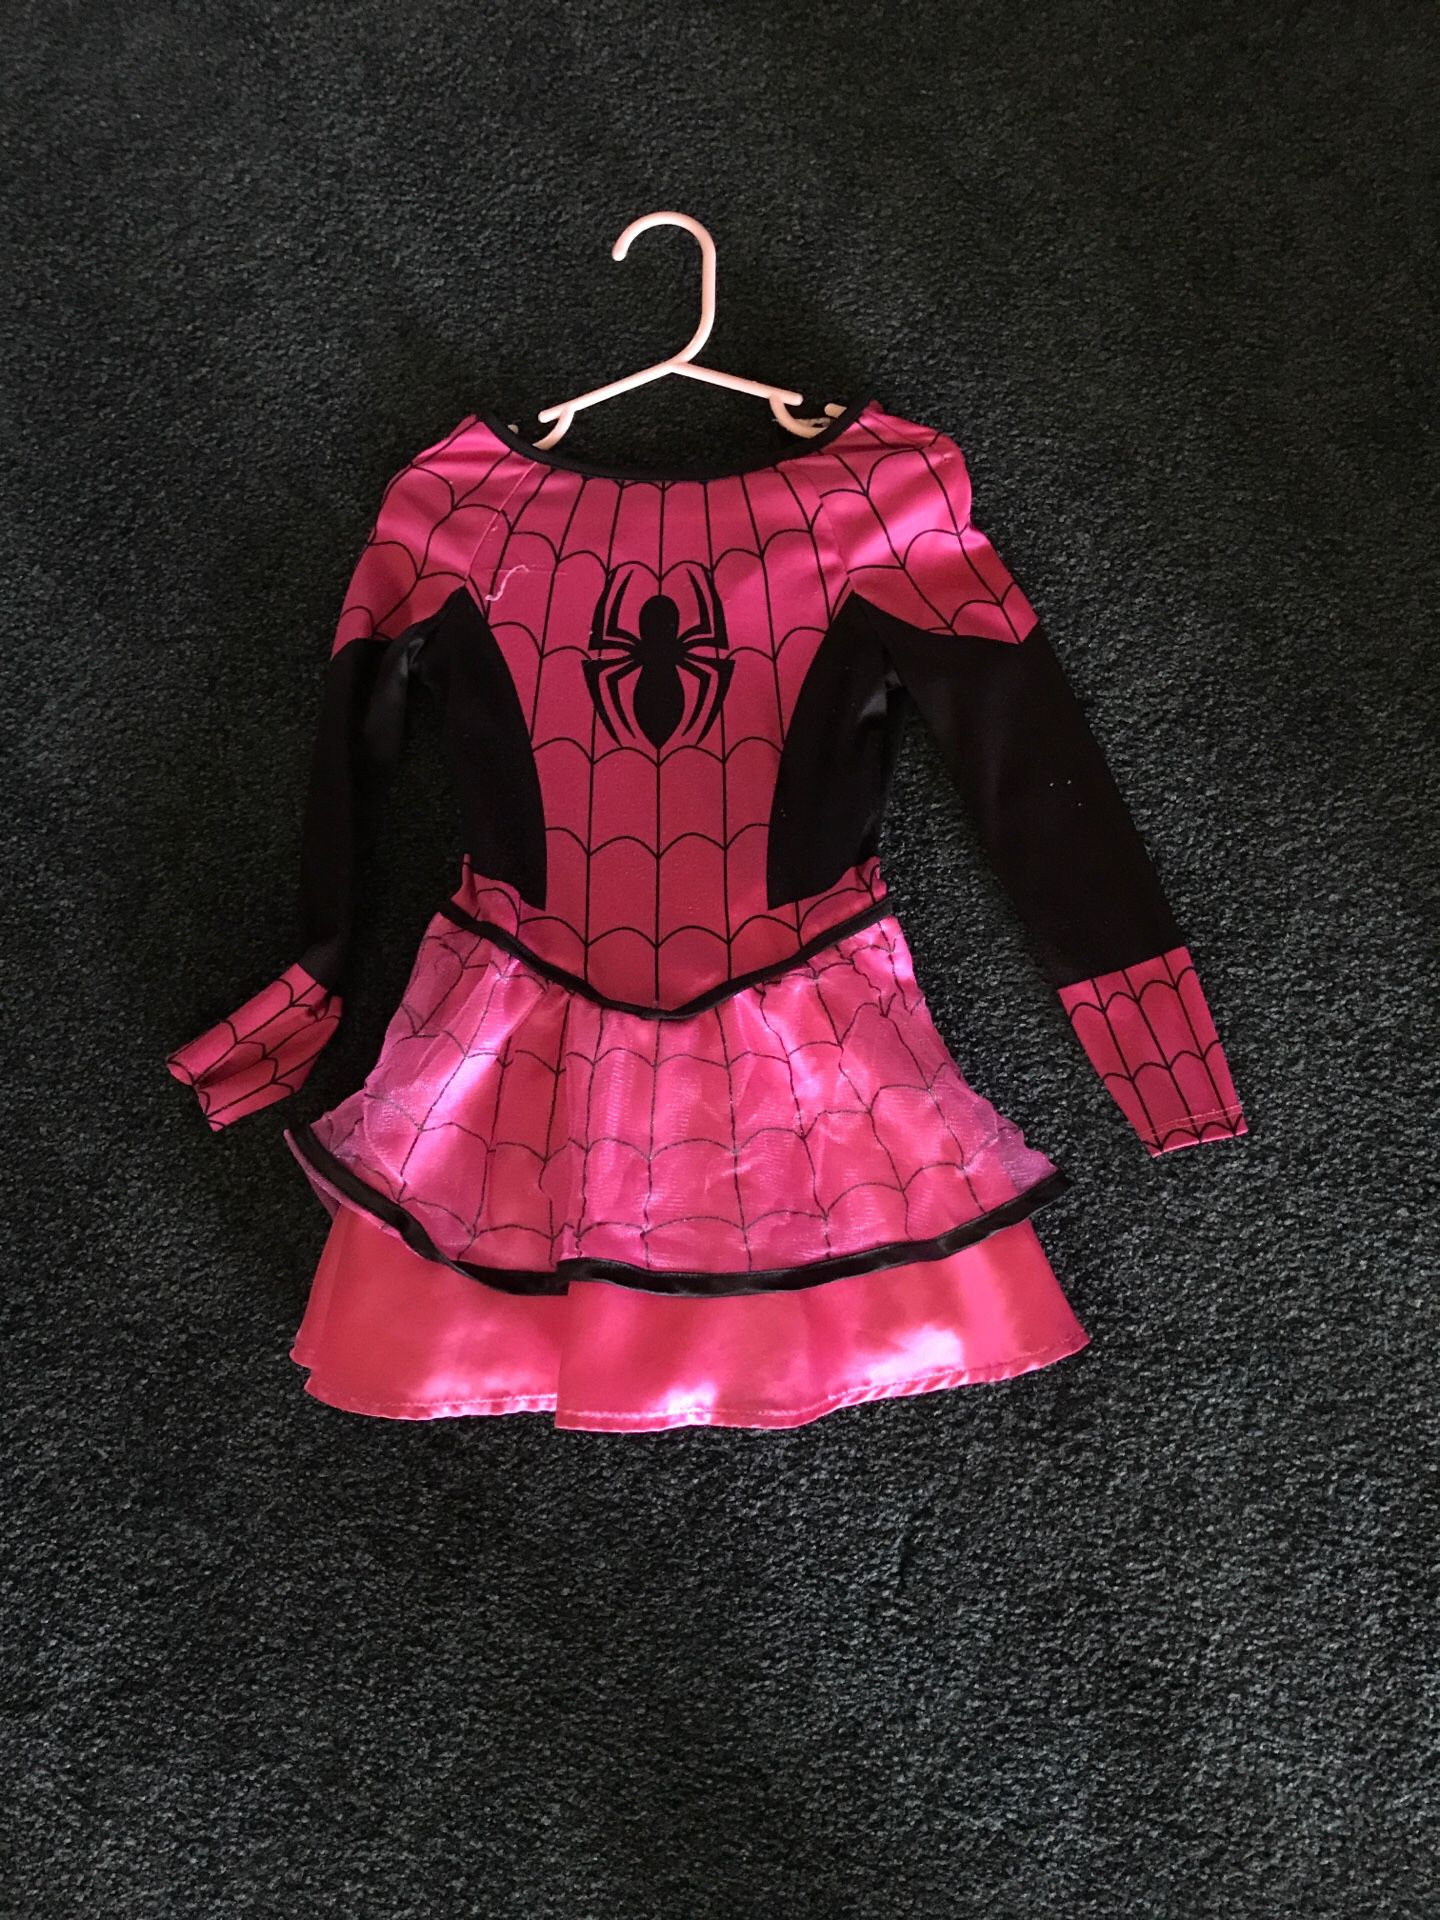 Spider girl costume